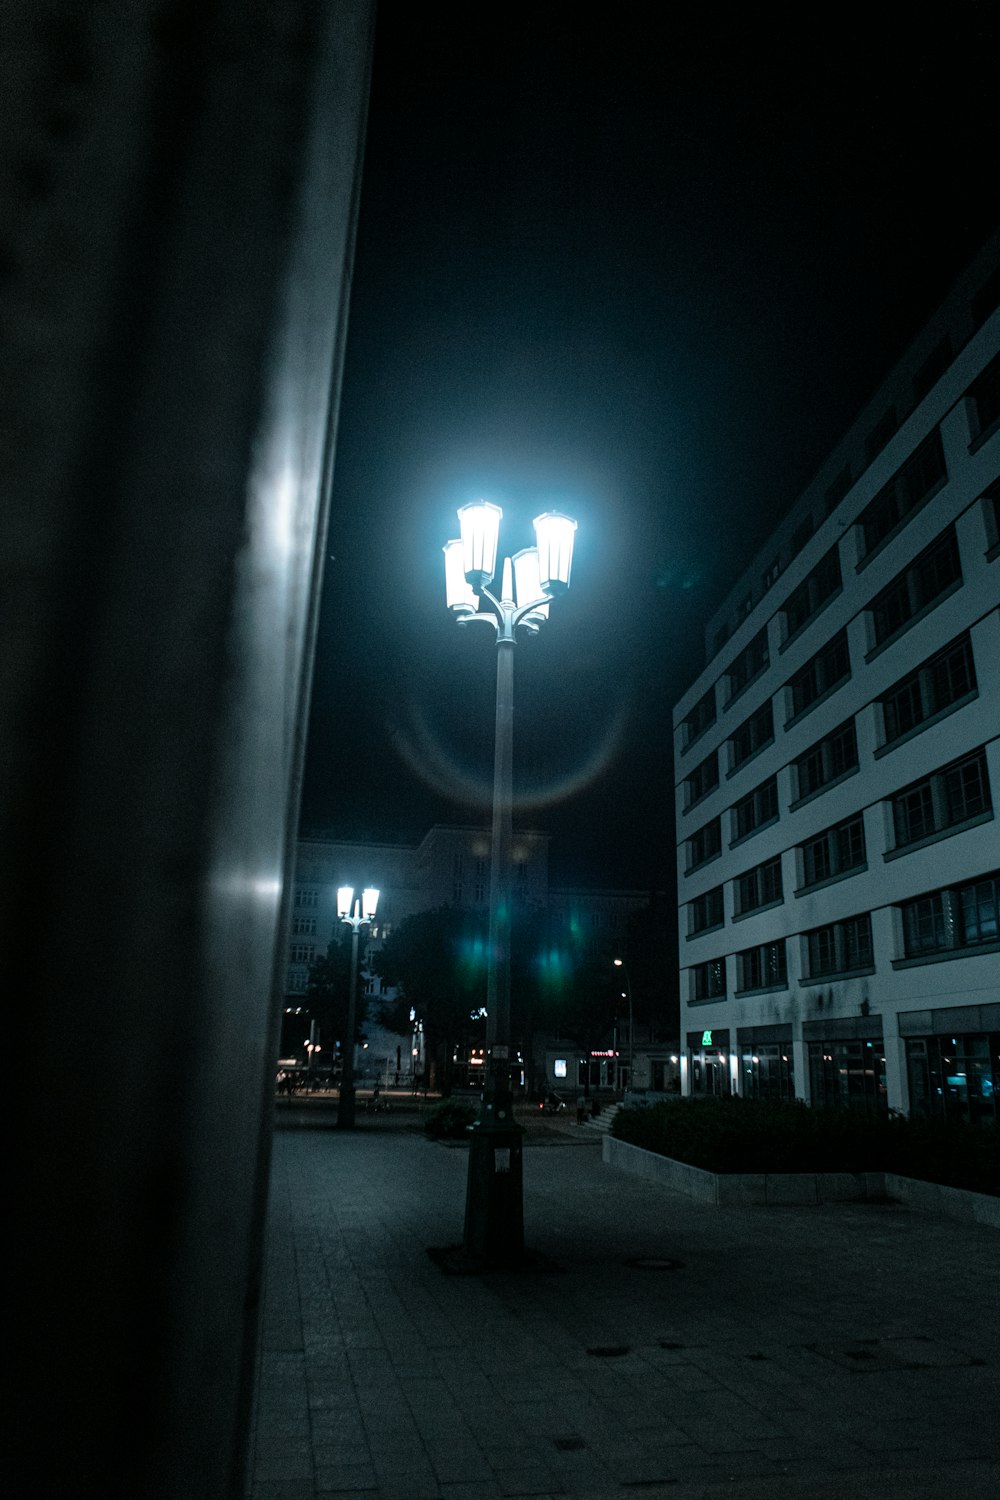 lighted street lights near building